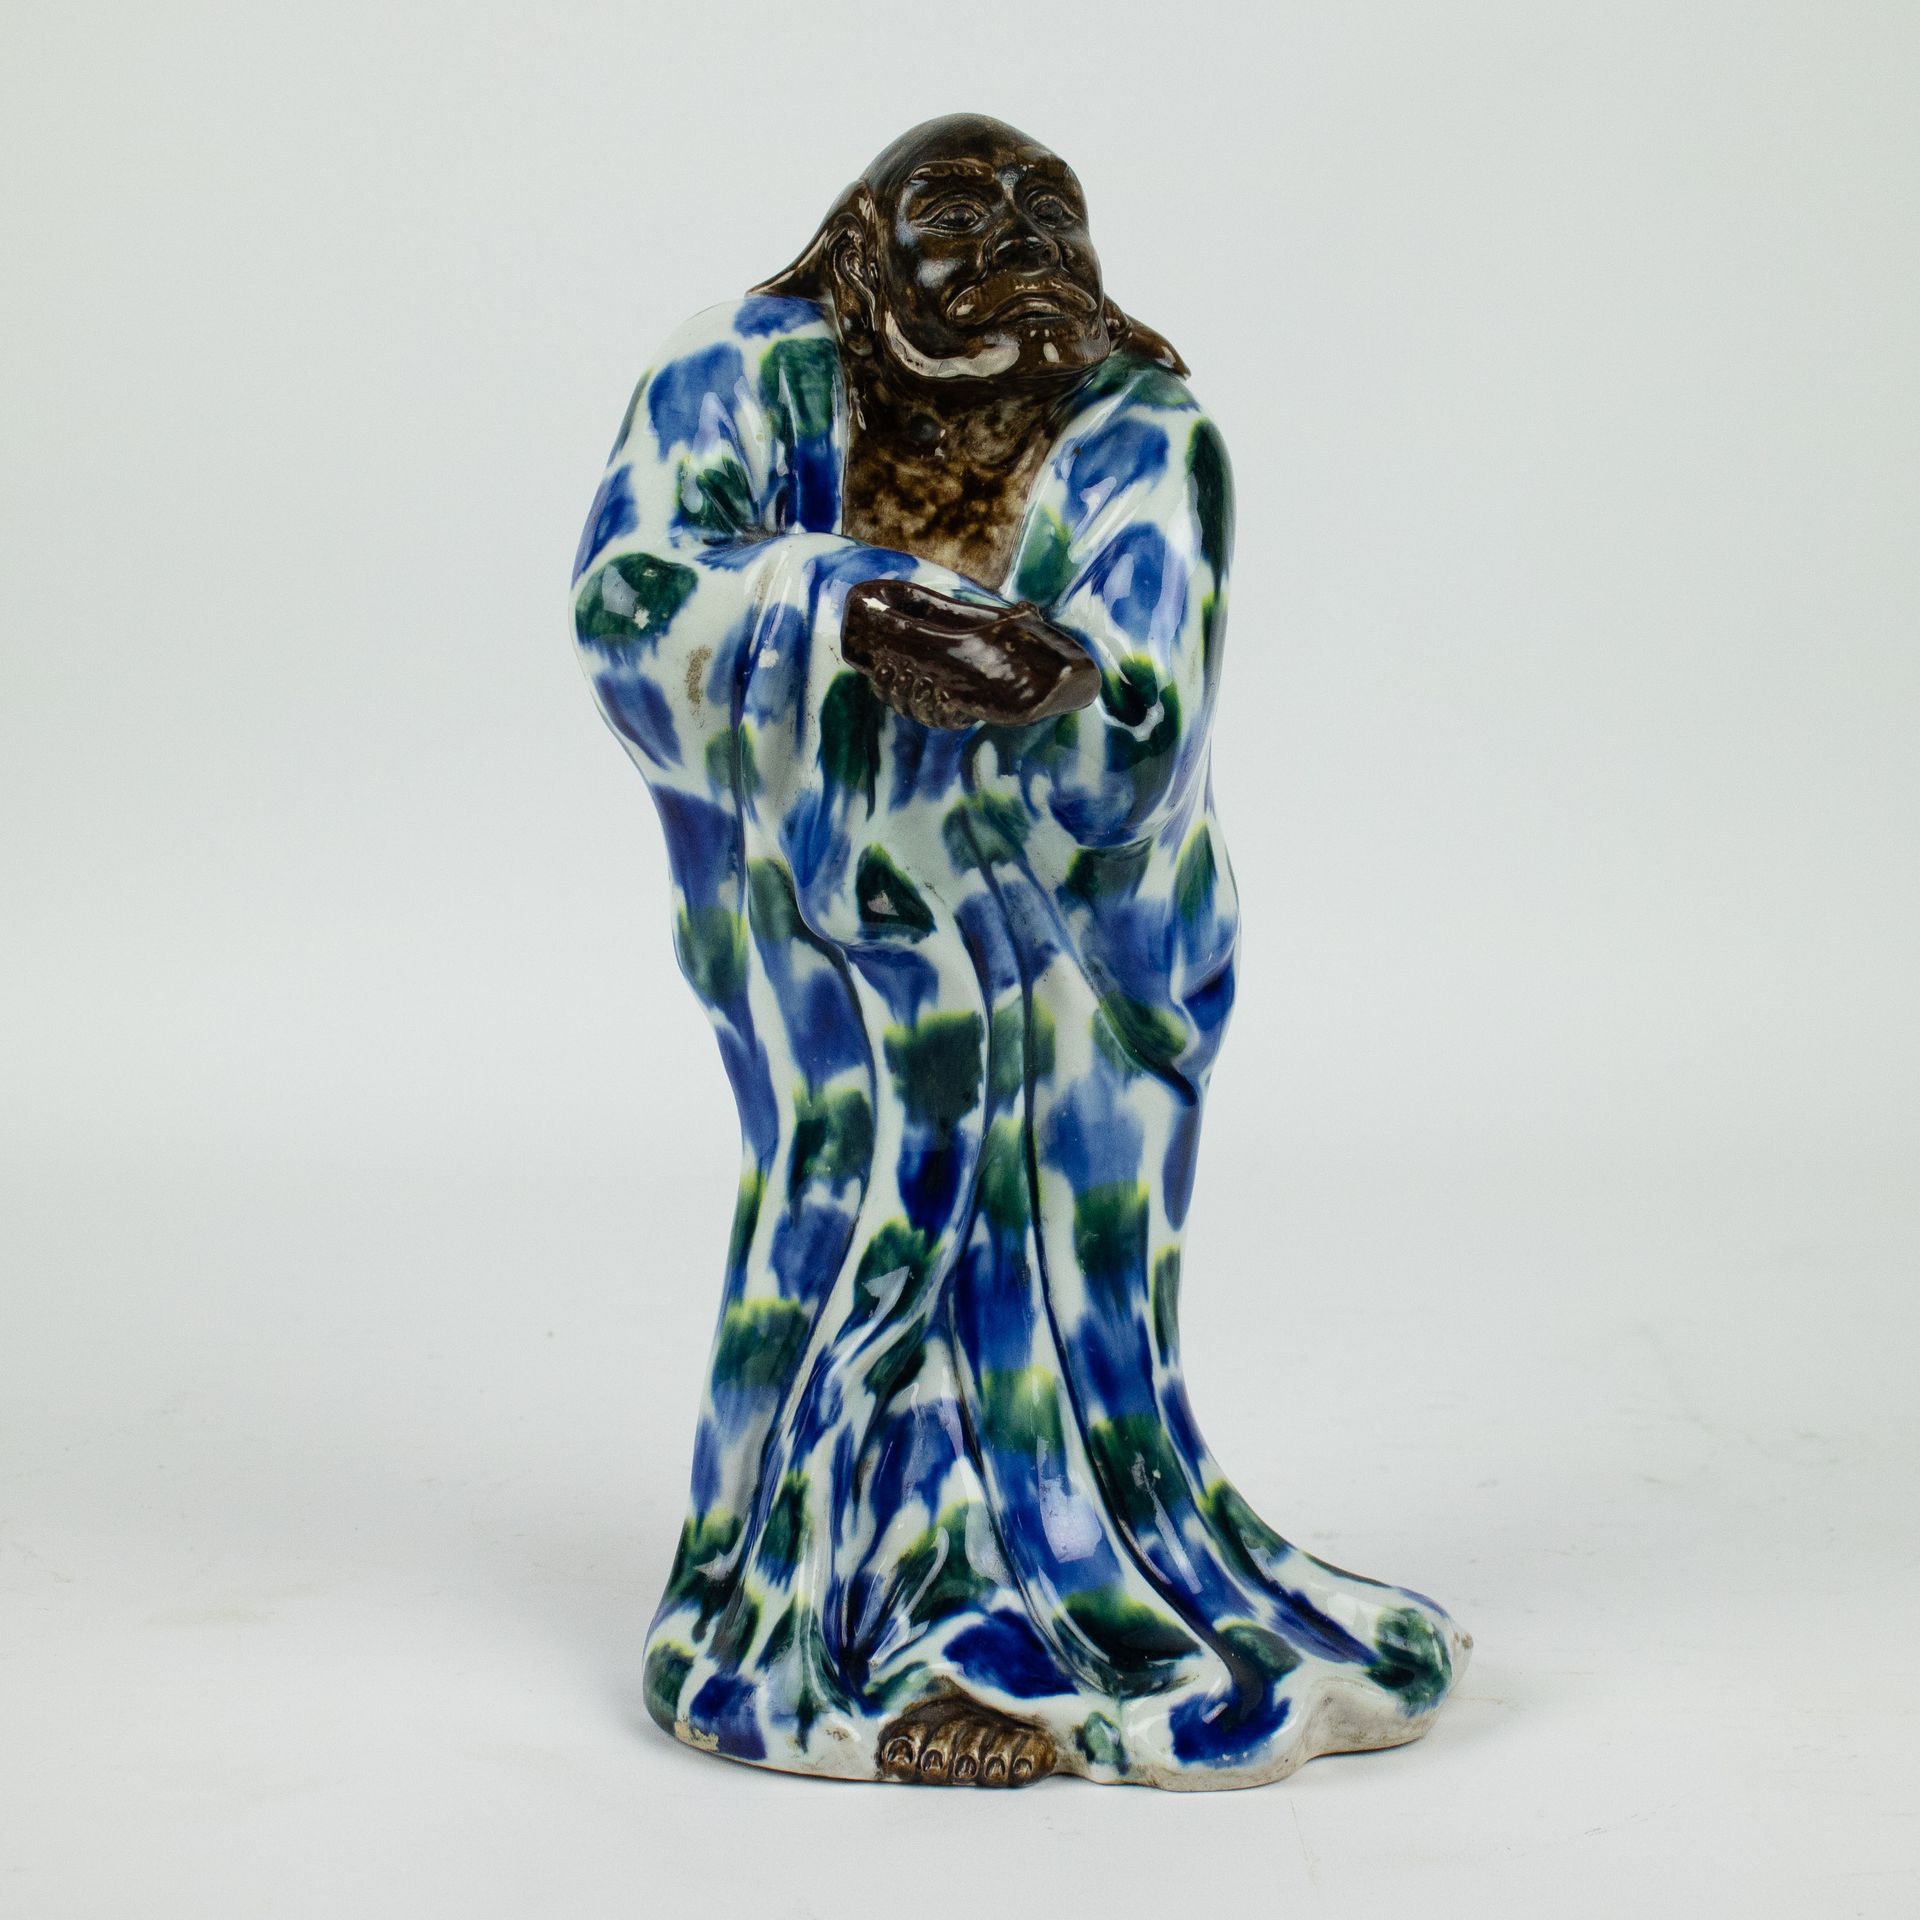 Ceramic sculpture, Samson Le Mediant"。卡拉米亚克-勒梅迪安，萨姆森。
高25厘米